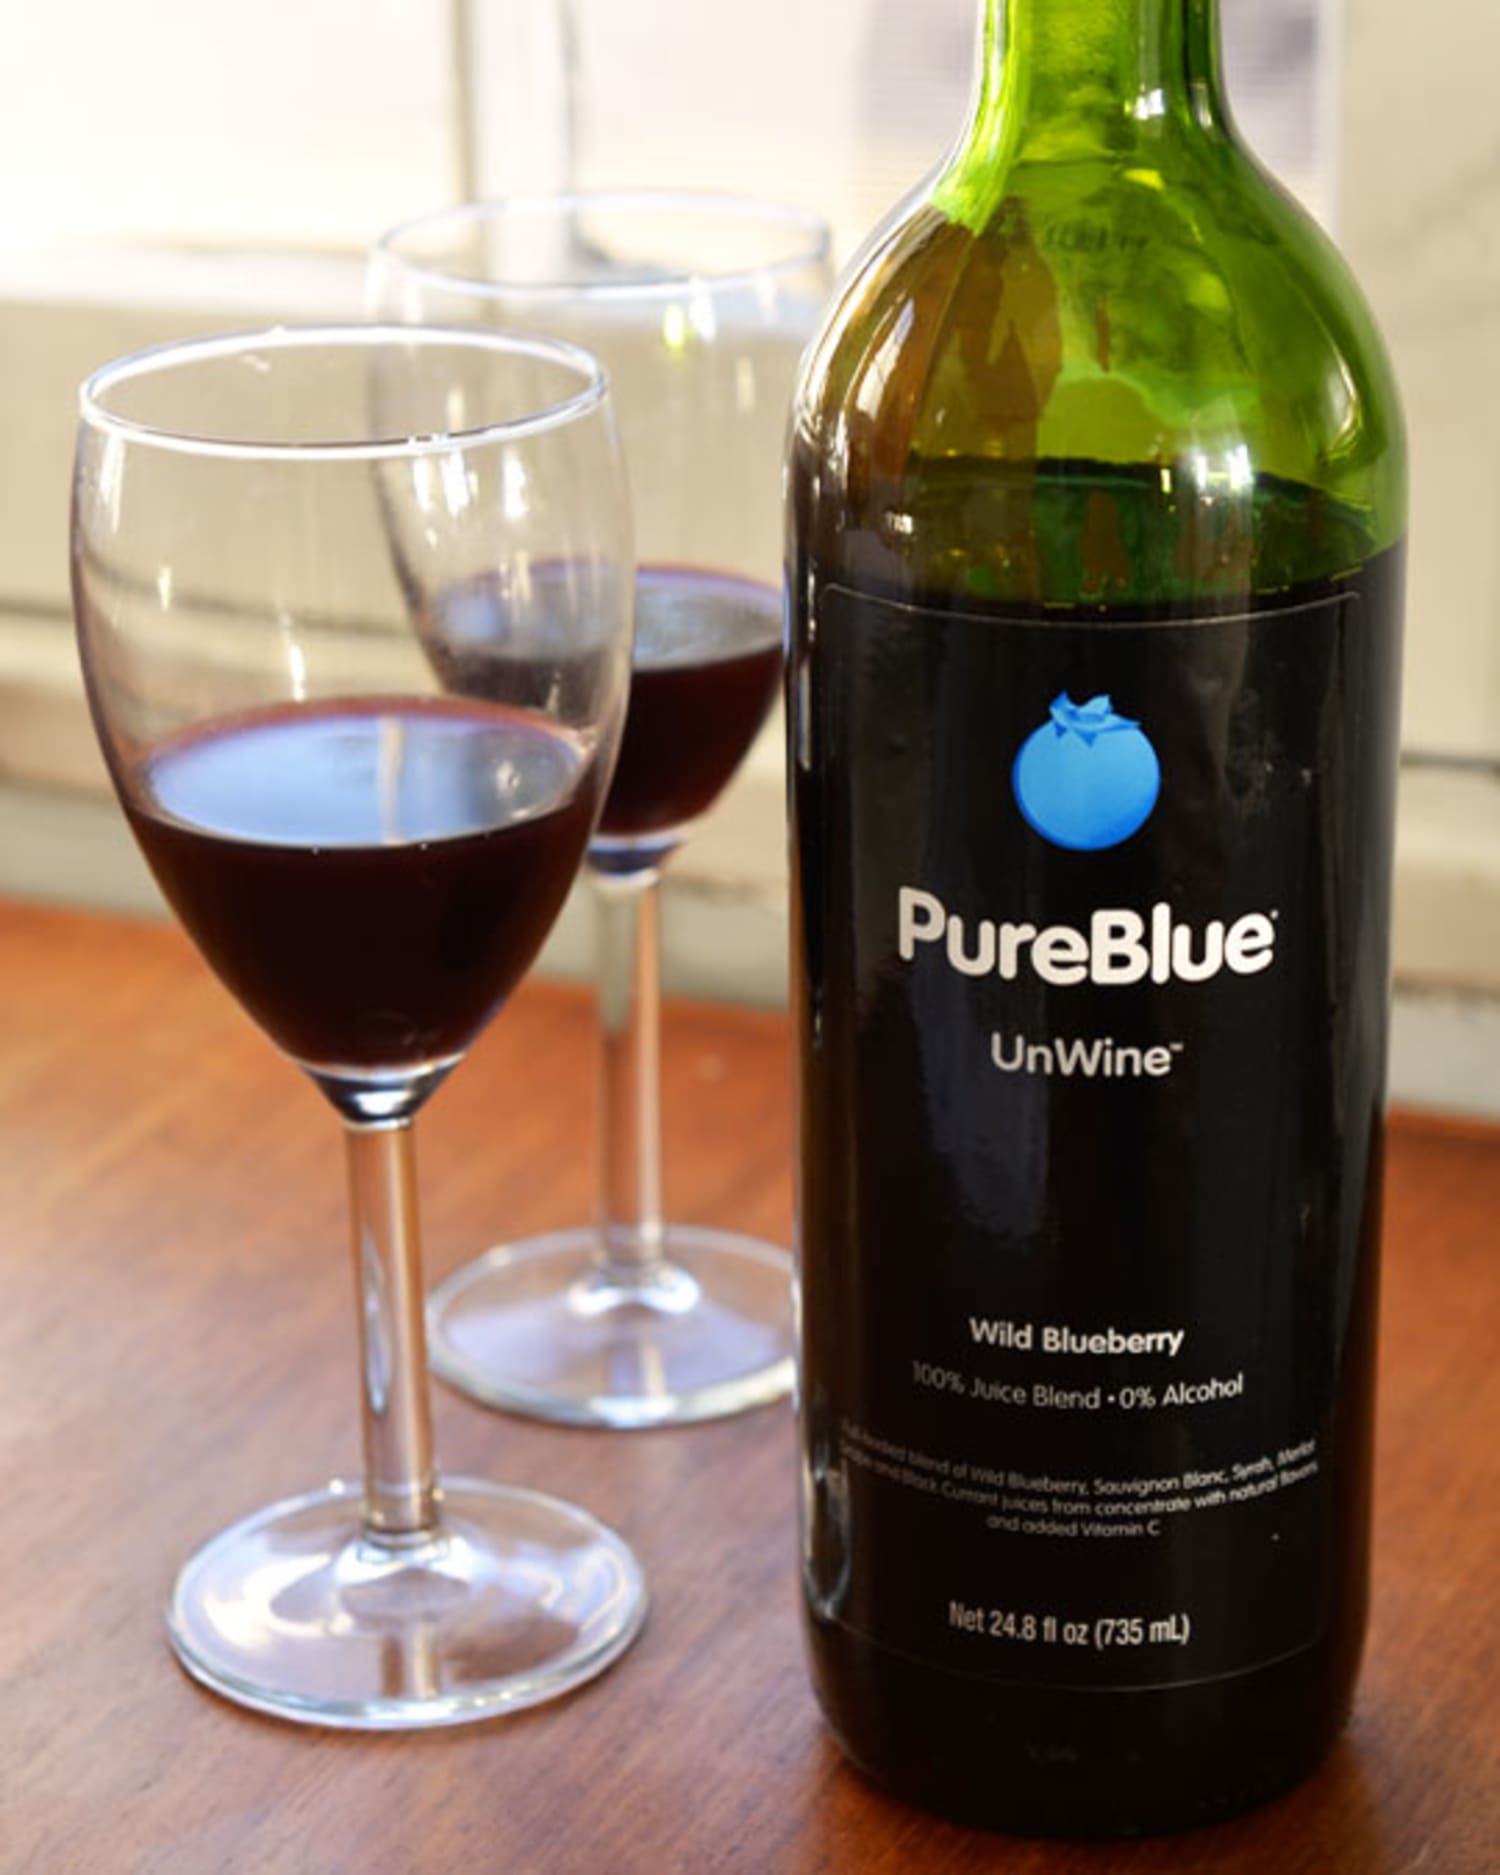 PureBlue UnWine with Wild Blueberry: A Non